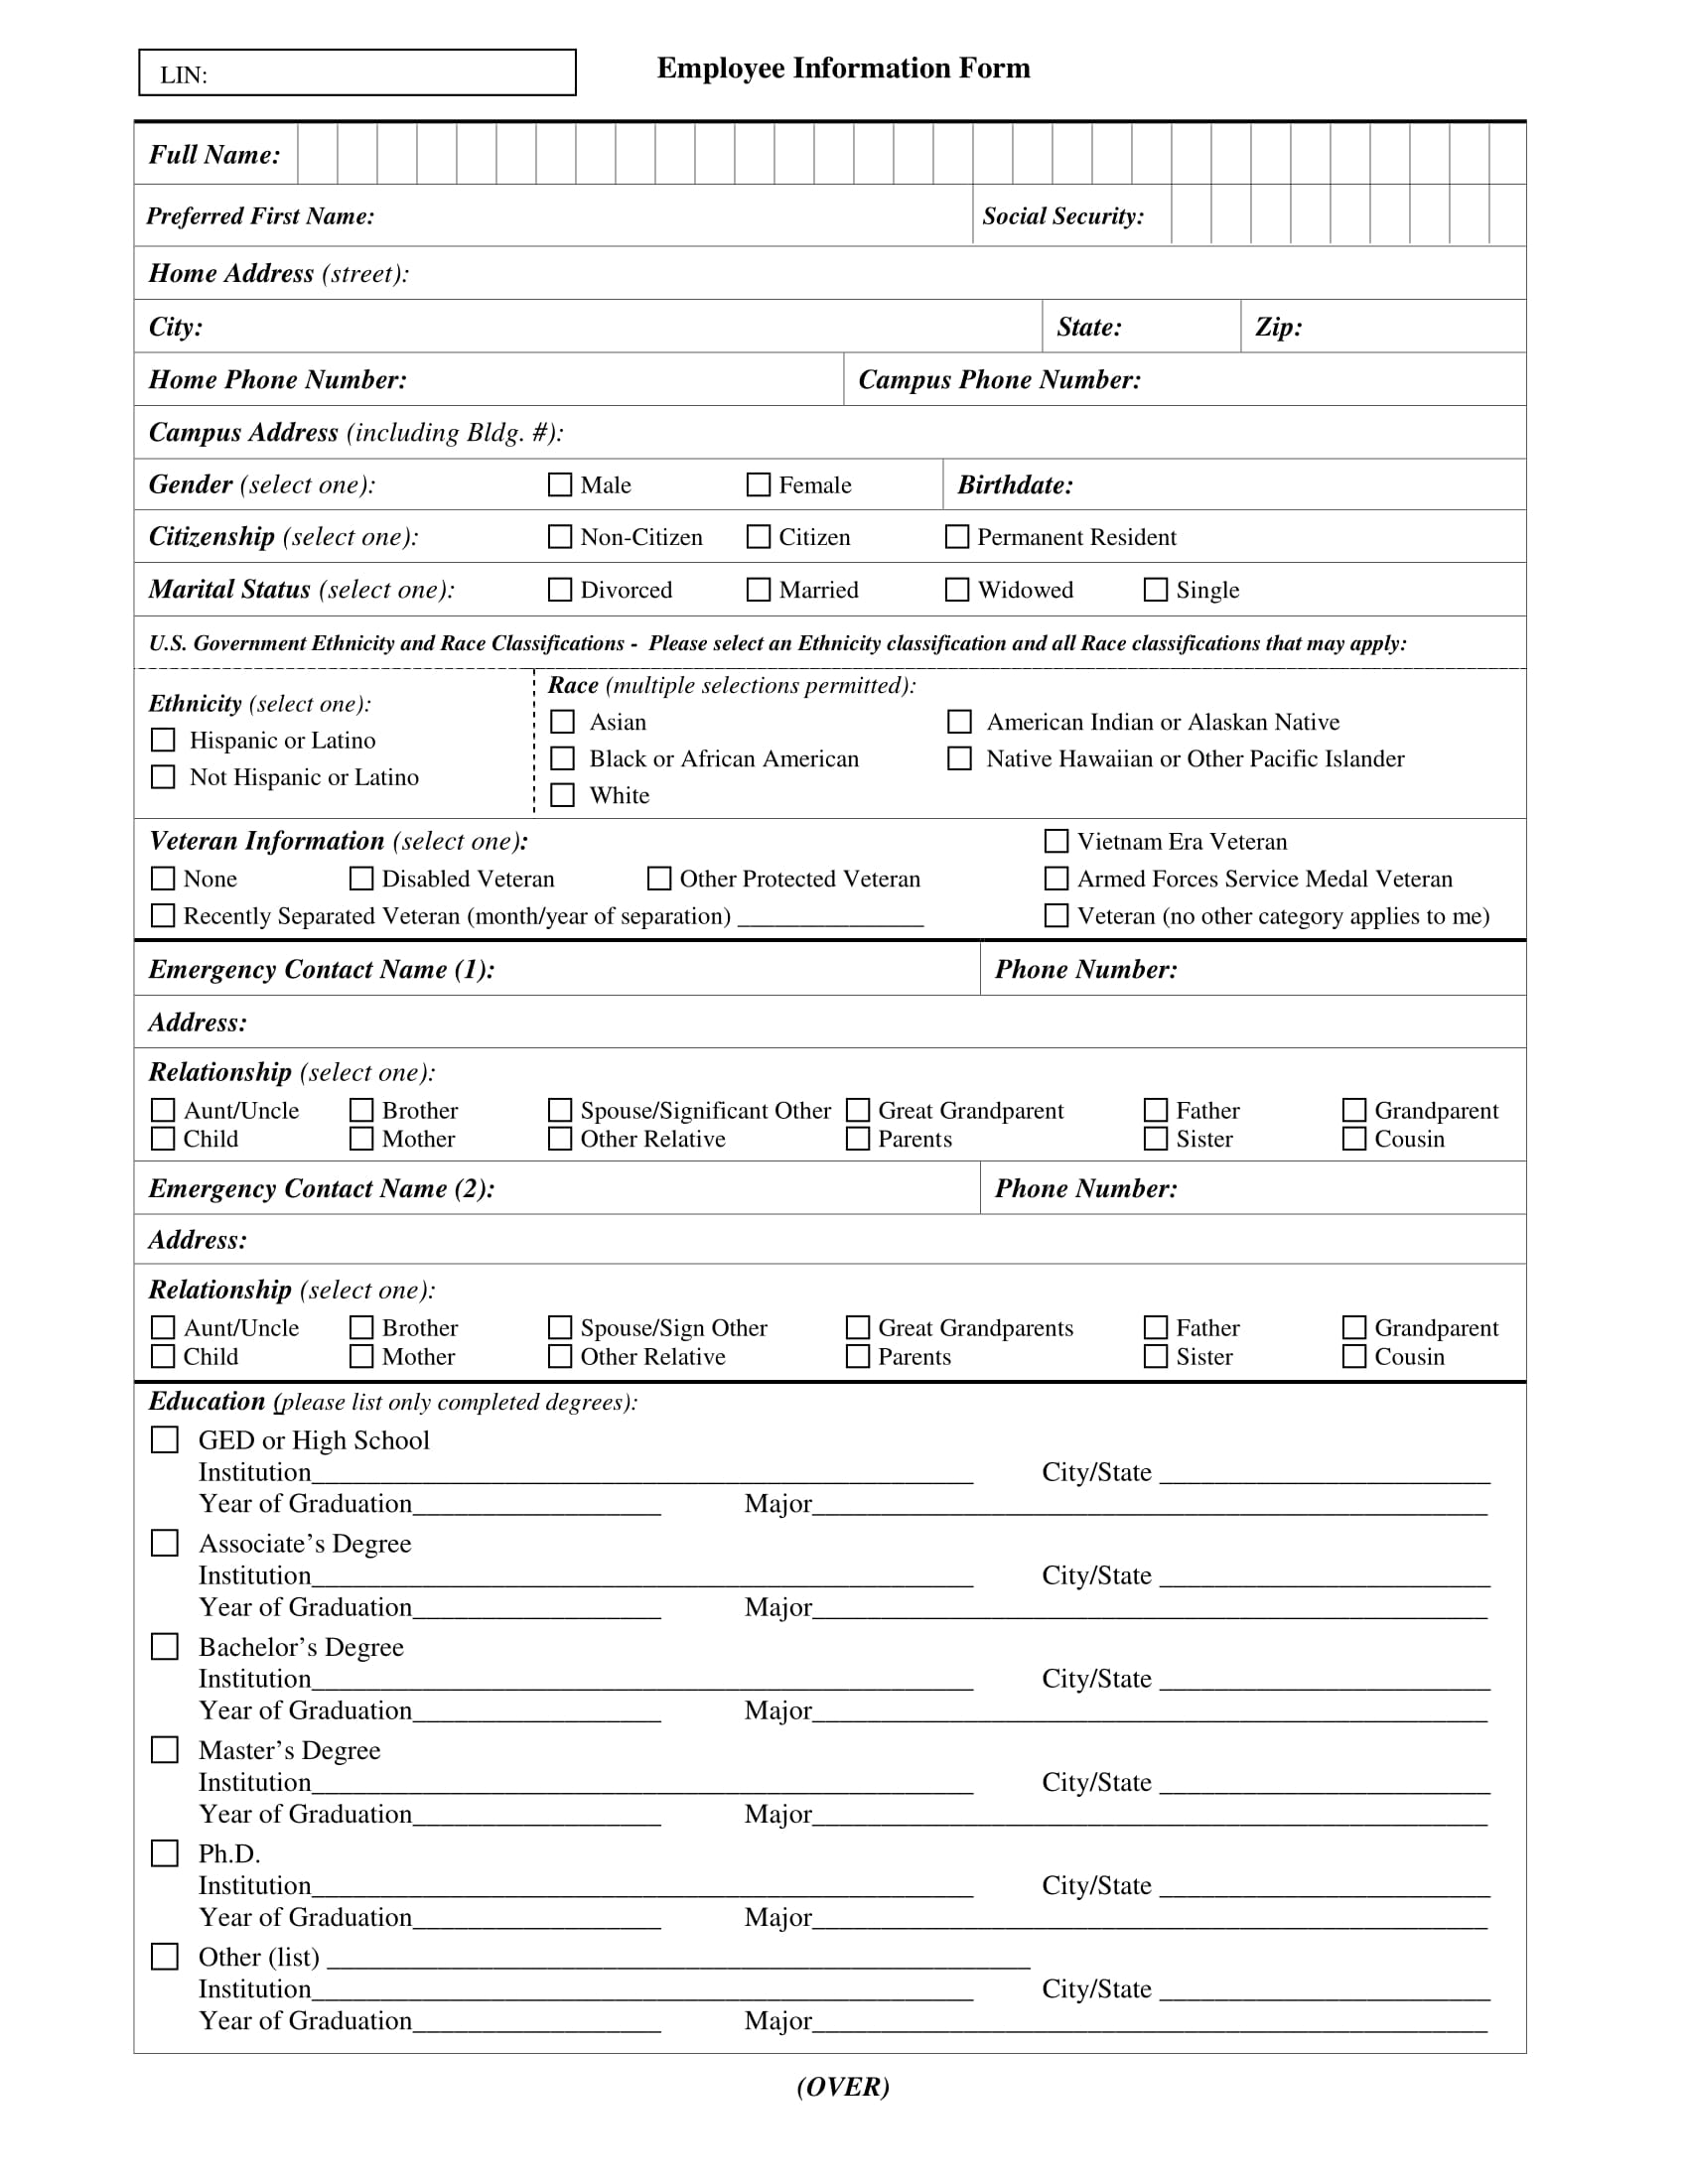 Employee Information Sheet Format